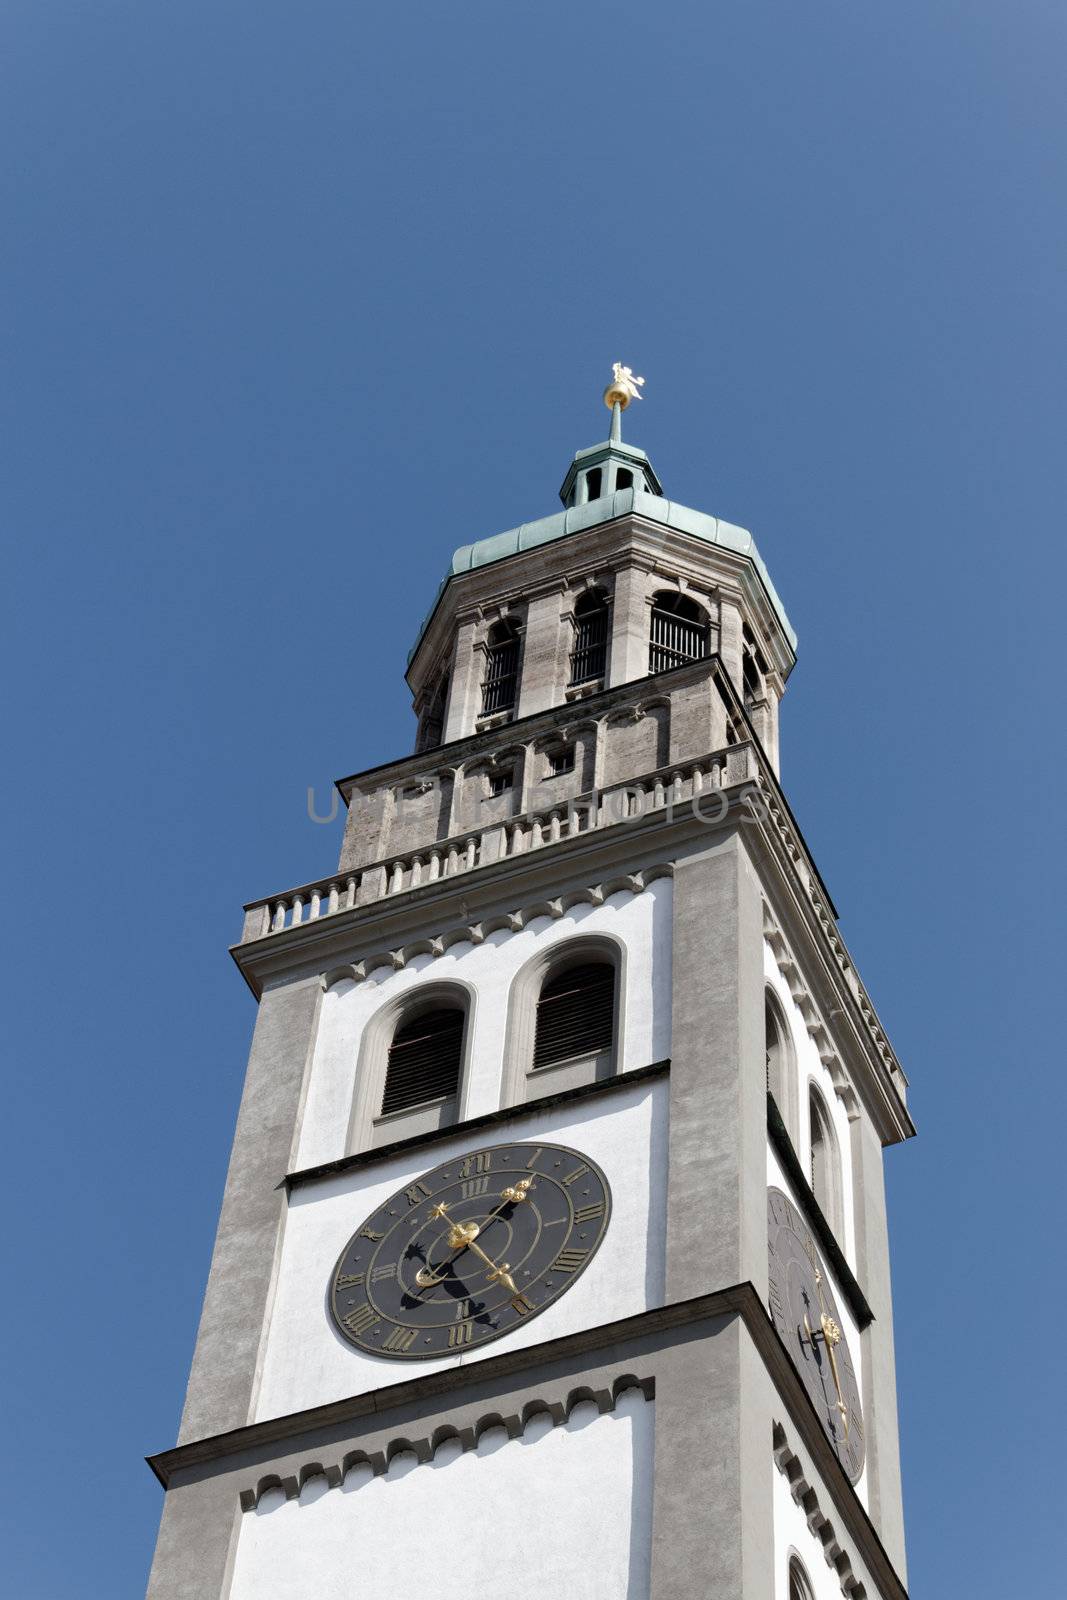 perlach tower in Augsburg, Bavaria, Germany